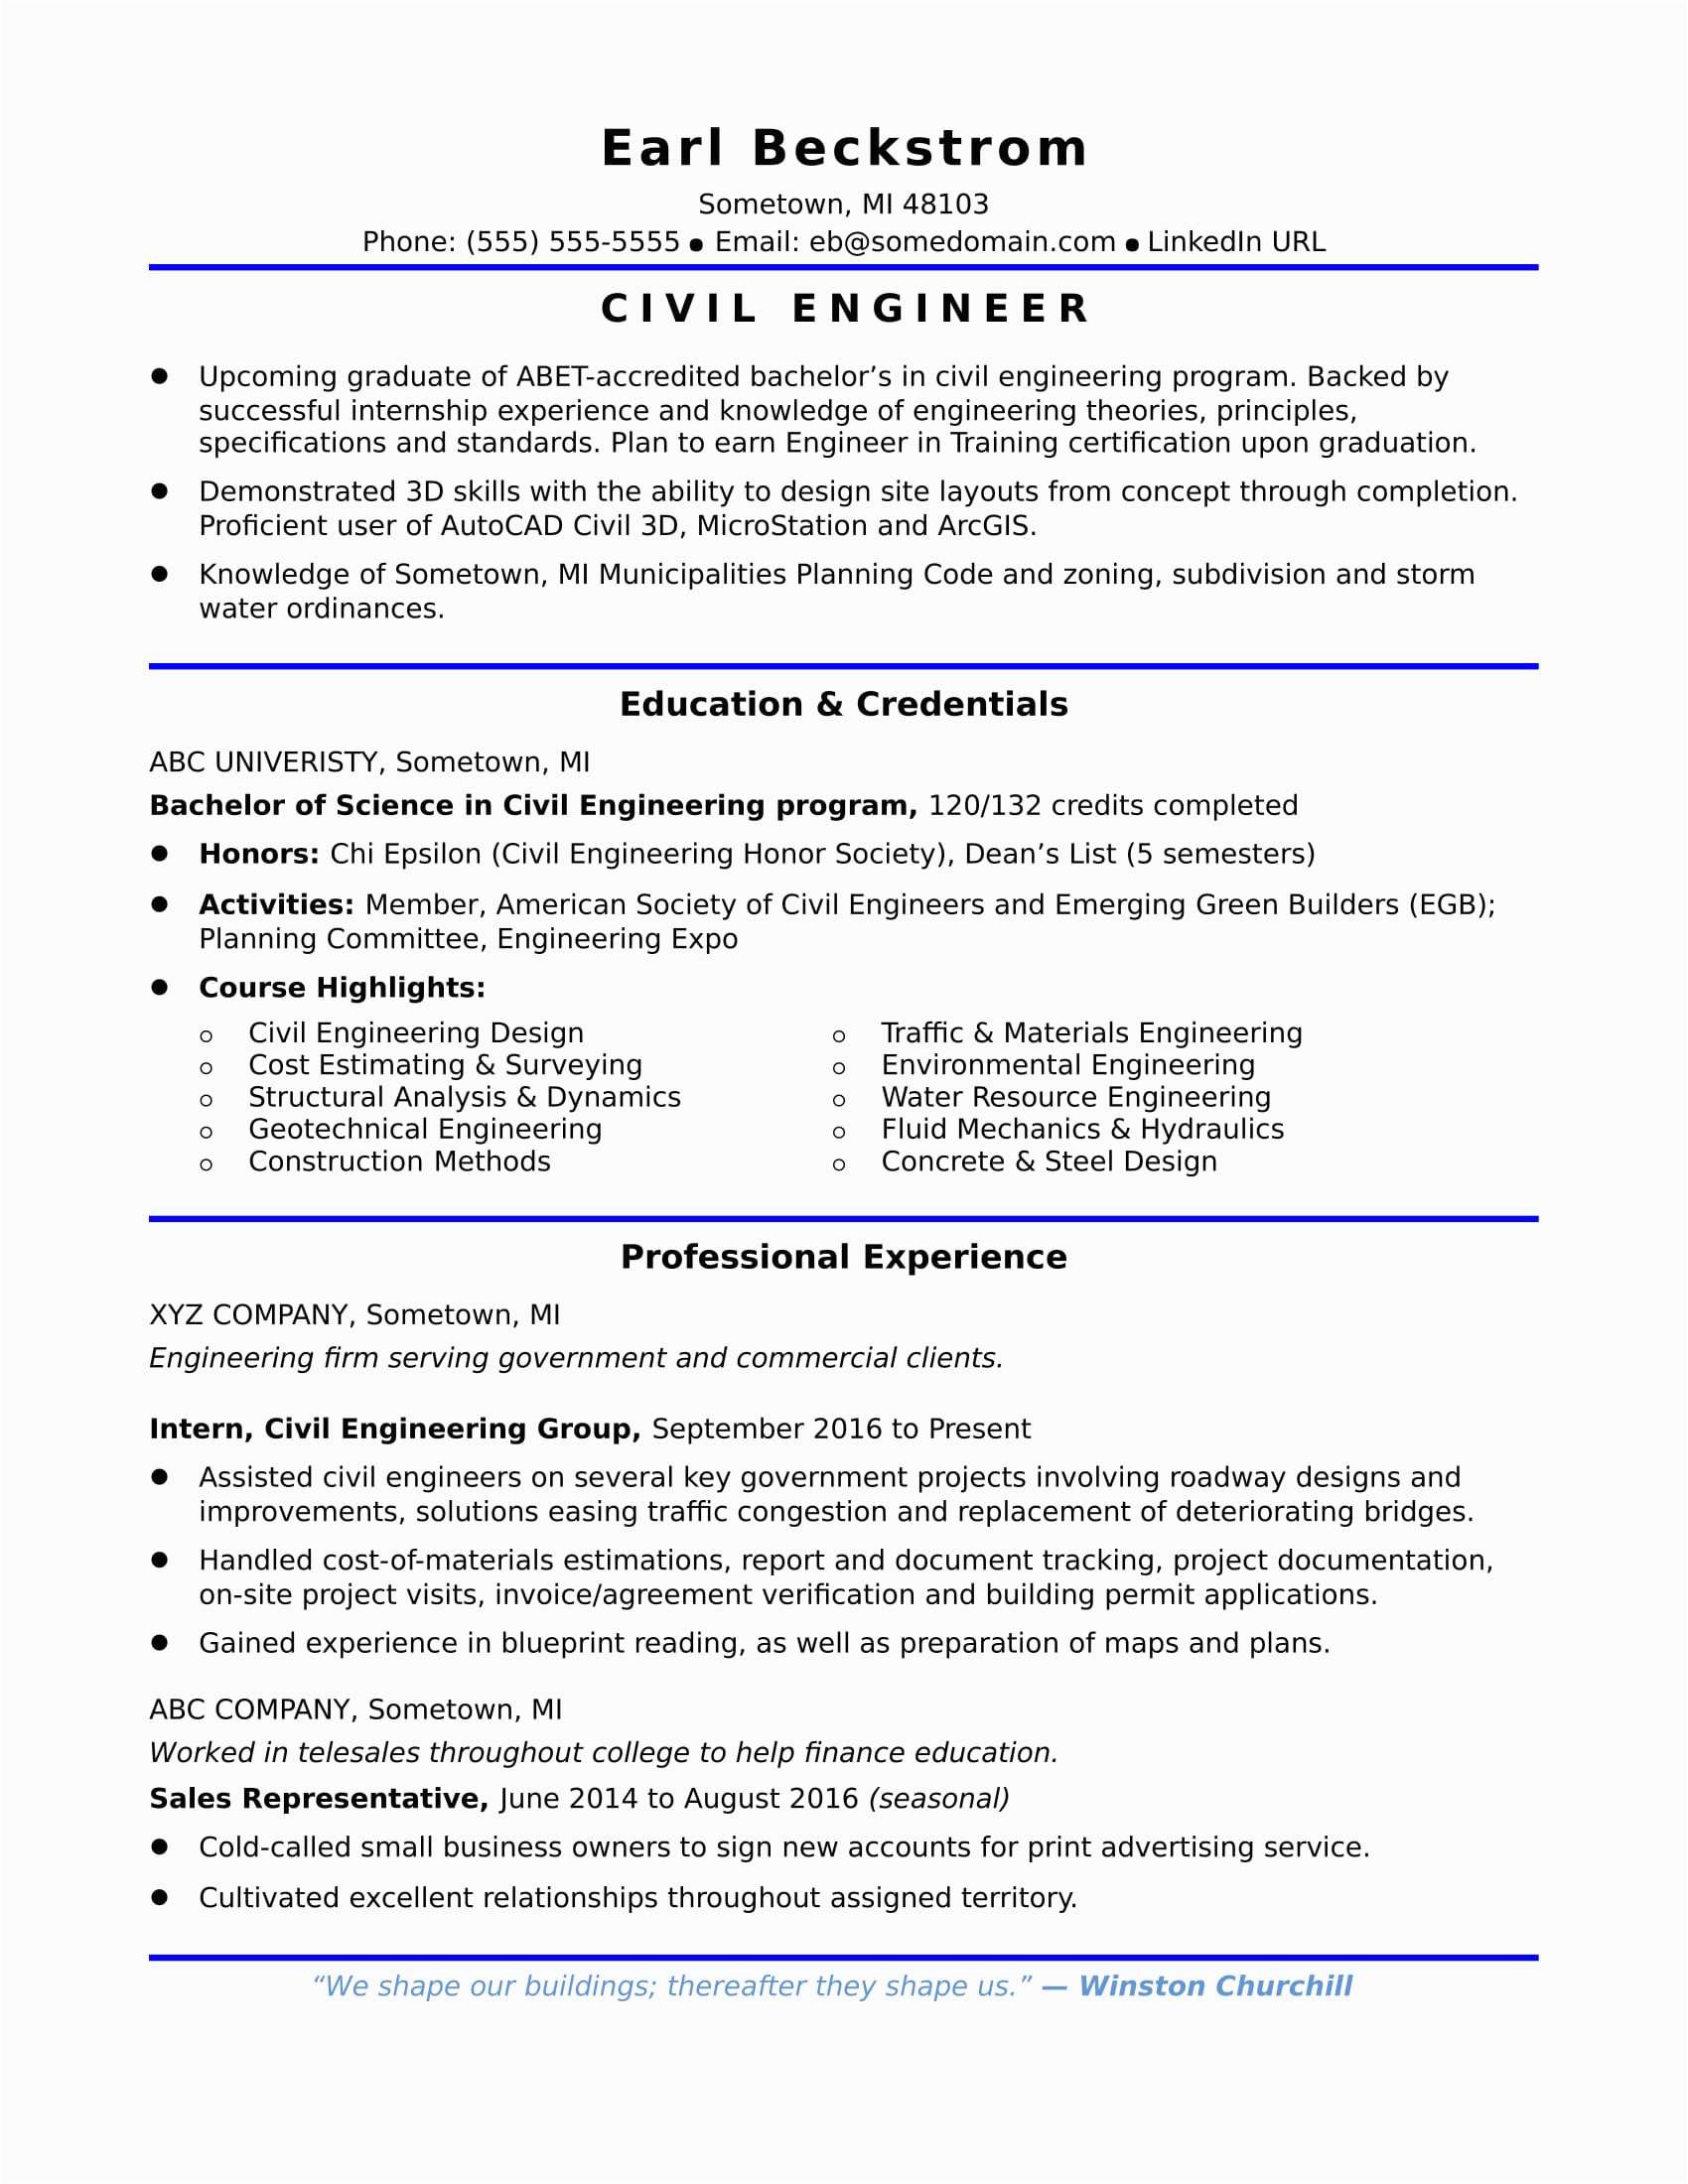 Civil Engineering Resume Samples for Experienced Sample Resume for An Entry Level Civil Engineer